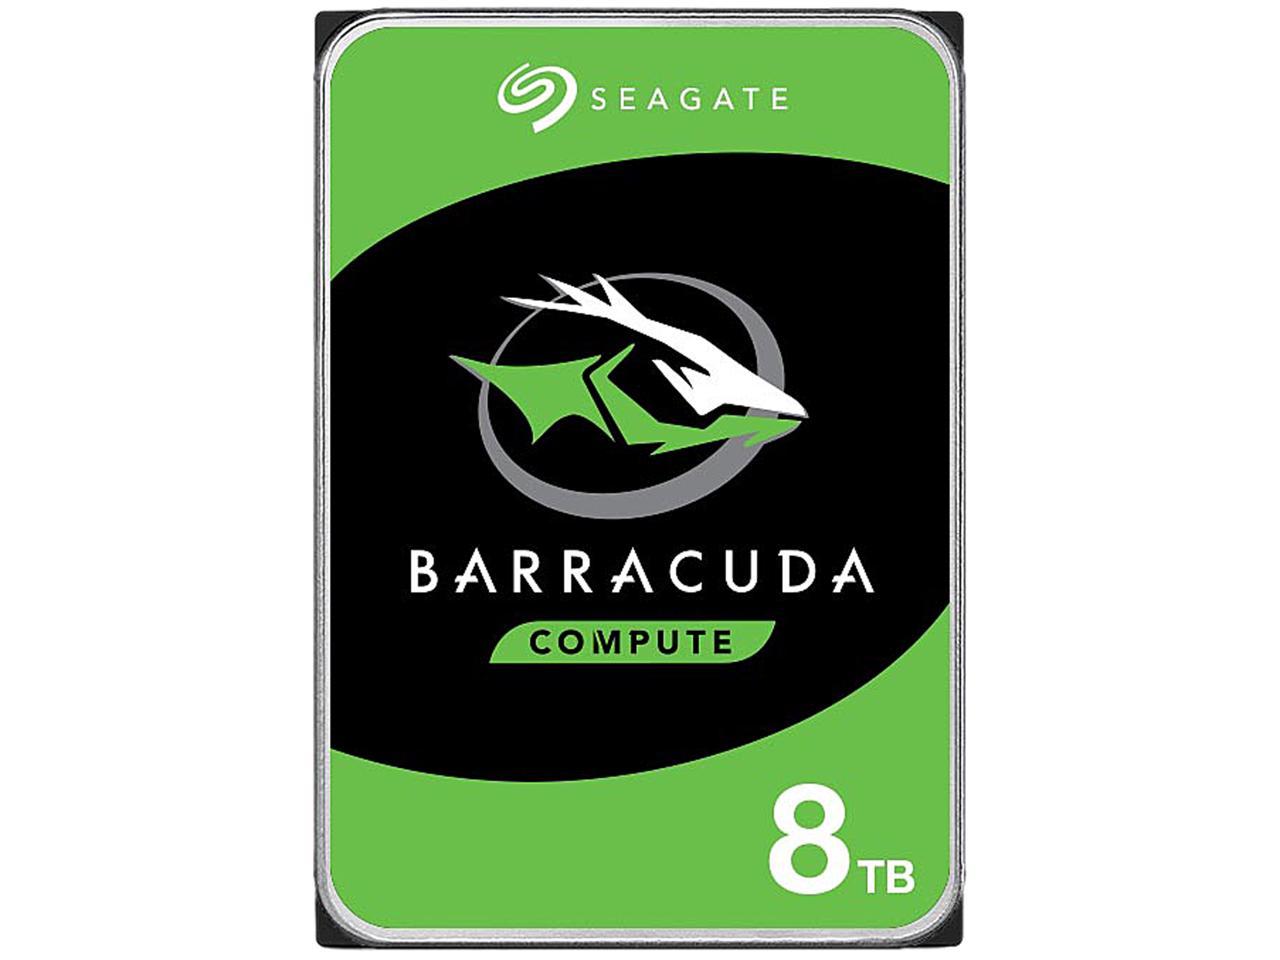 Seagate Barracuda 8TB 3.5" 5400RPM Internal Hard Drive SATA 6.0Gb/s $99.99